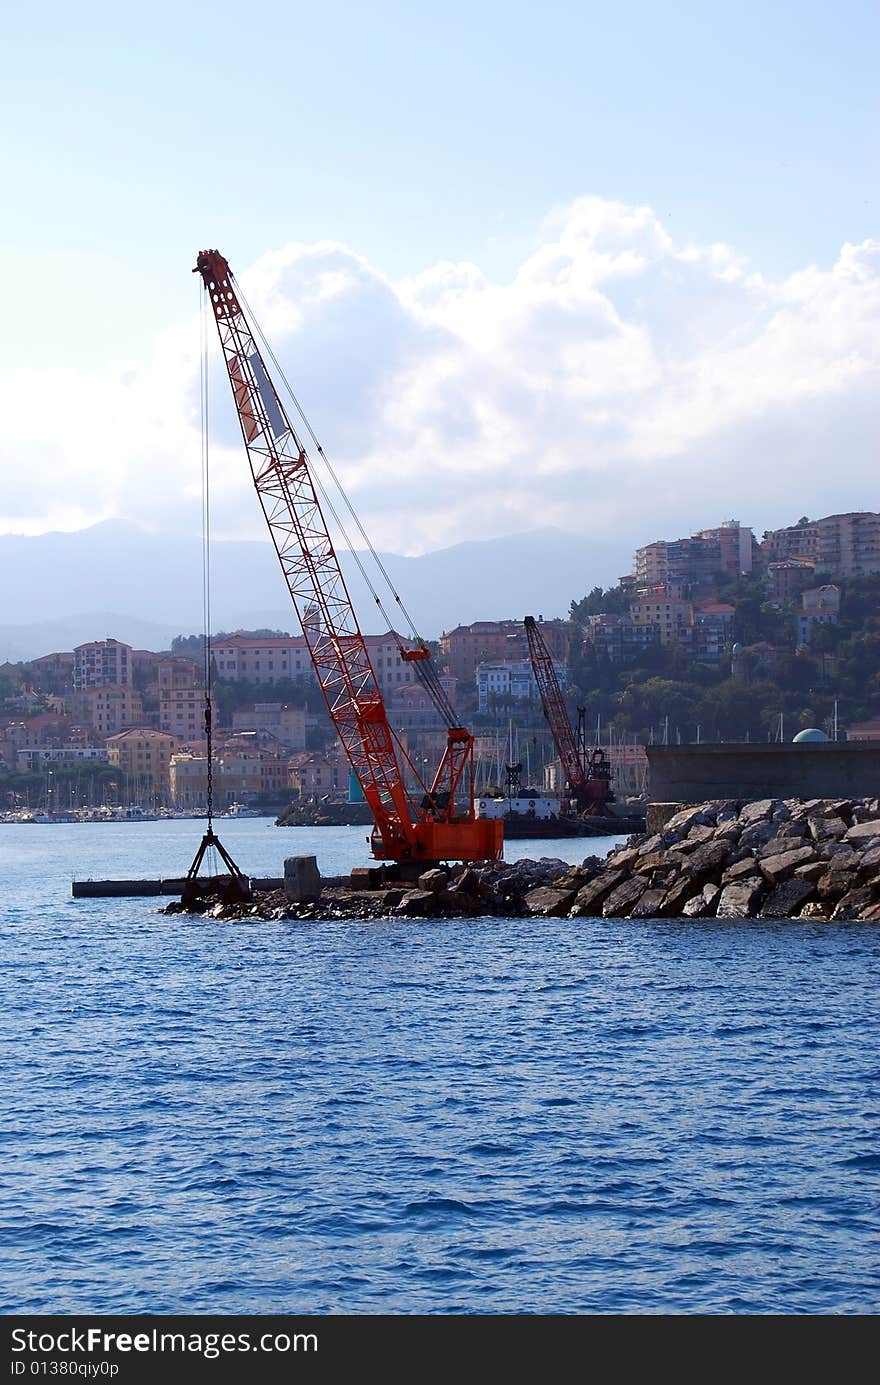 A platform and a crane in a harbour. A platform and a crane in a harbour